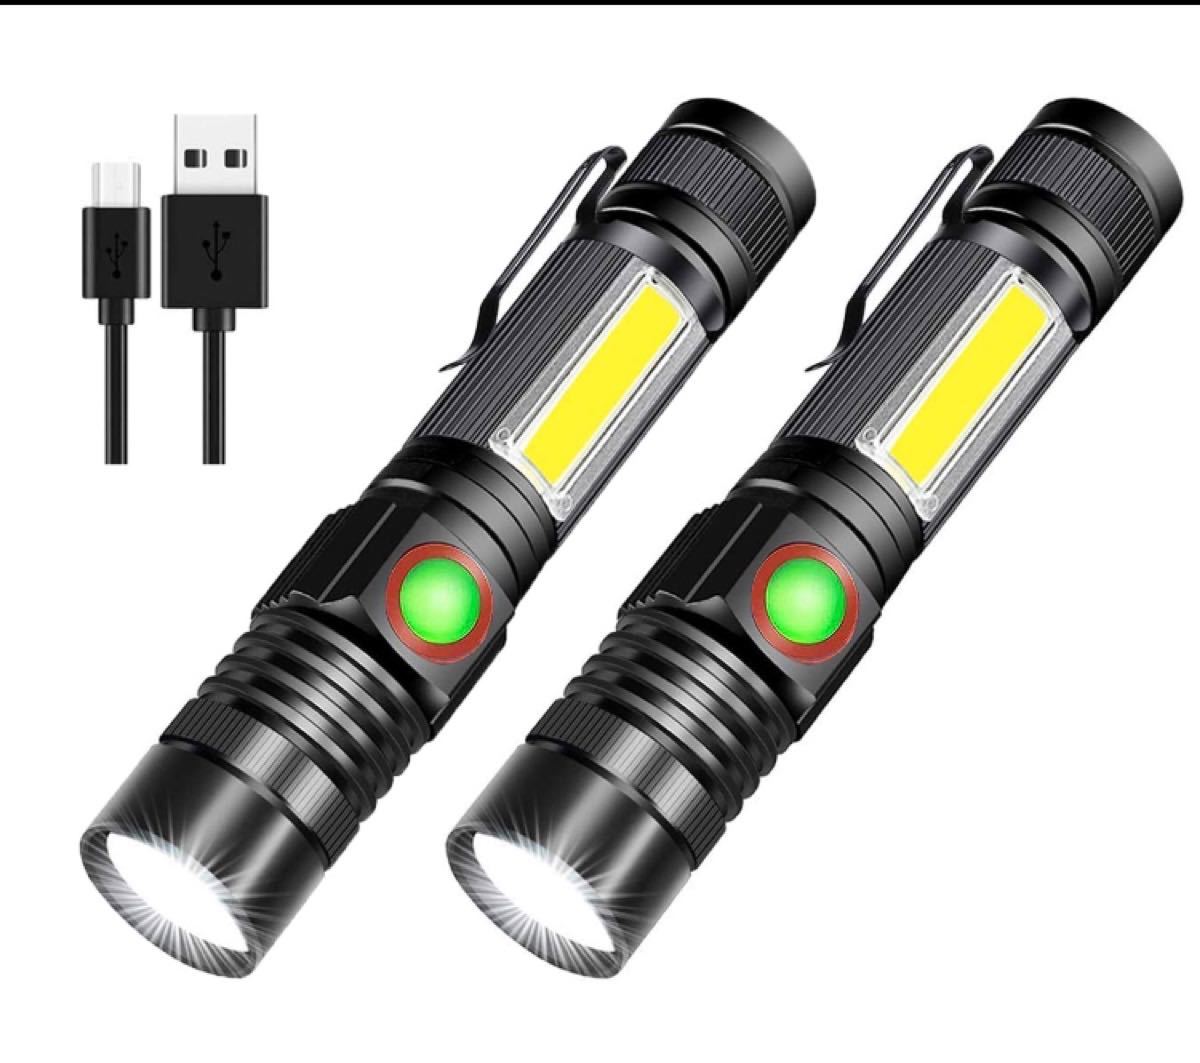 2個セット懐中電灯 LED COB作業灯 充電式 大容量 軍用超高輝度 ズーム式